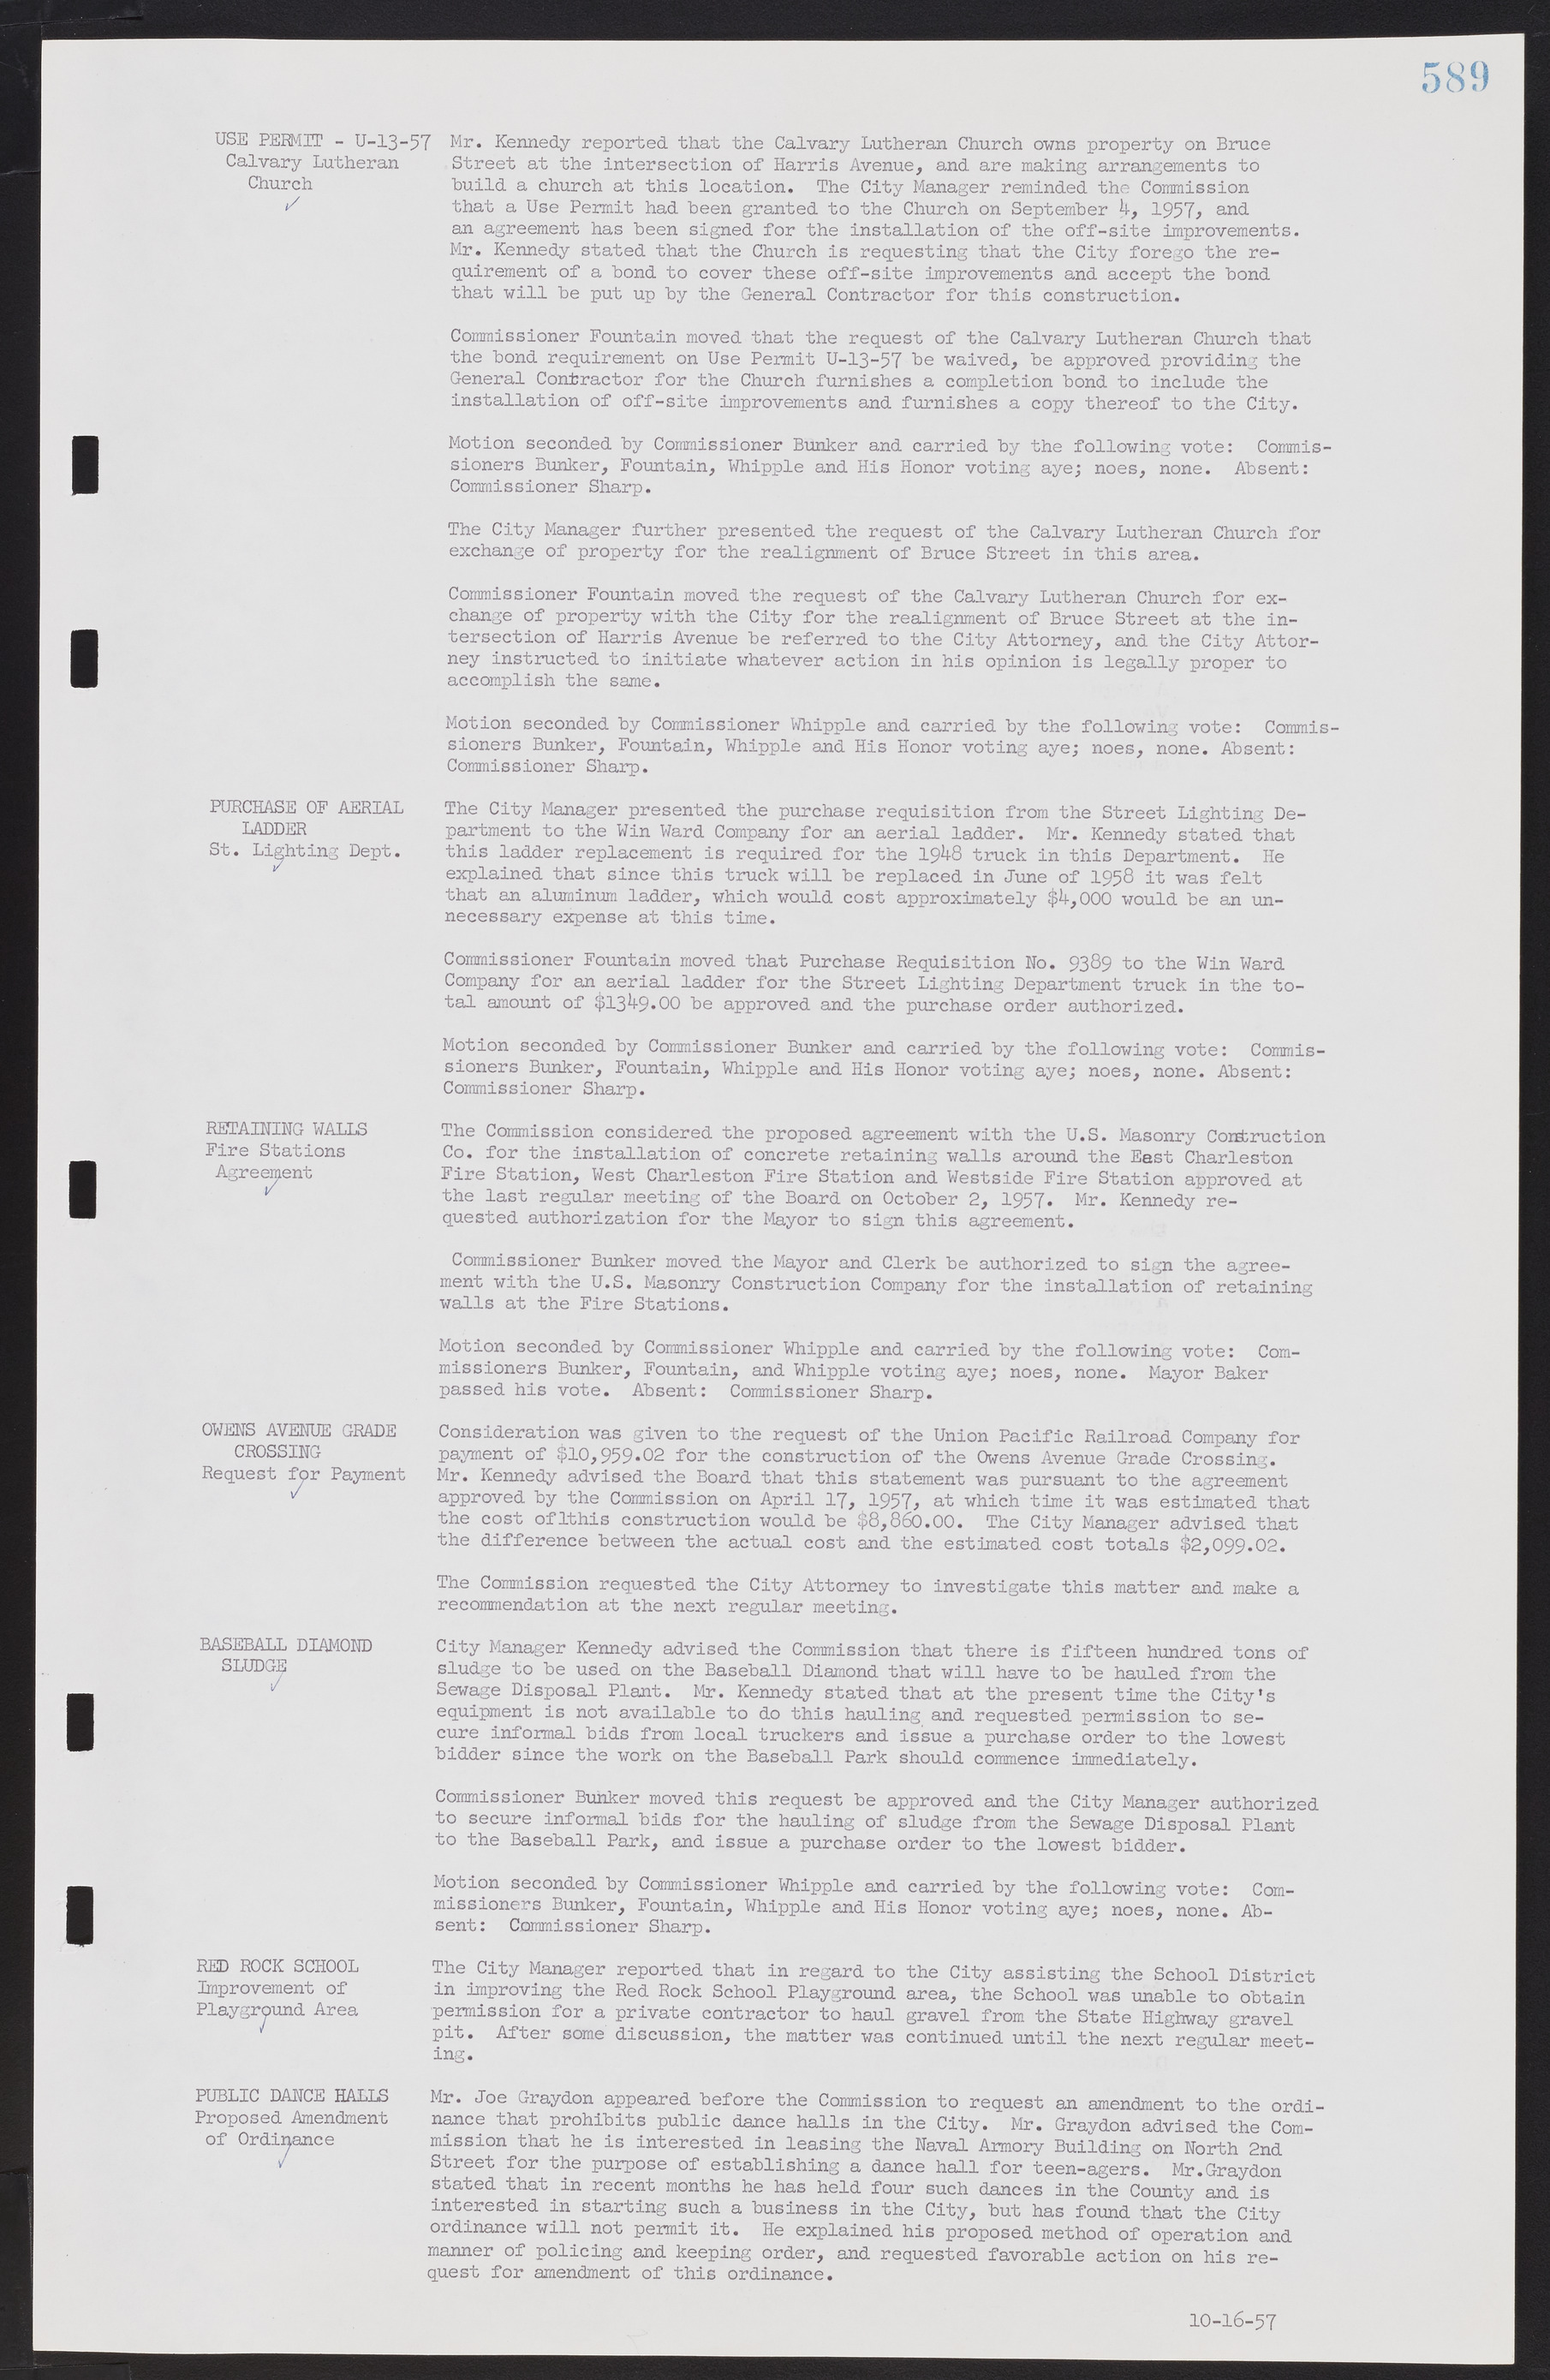 Las Vegas City Commission Minutes, September 21, 1955 to November 20, 1957, lvc000010-609